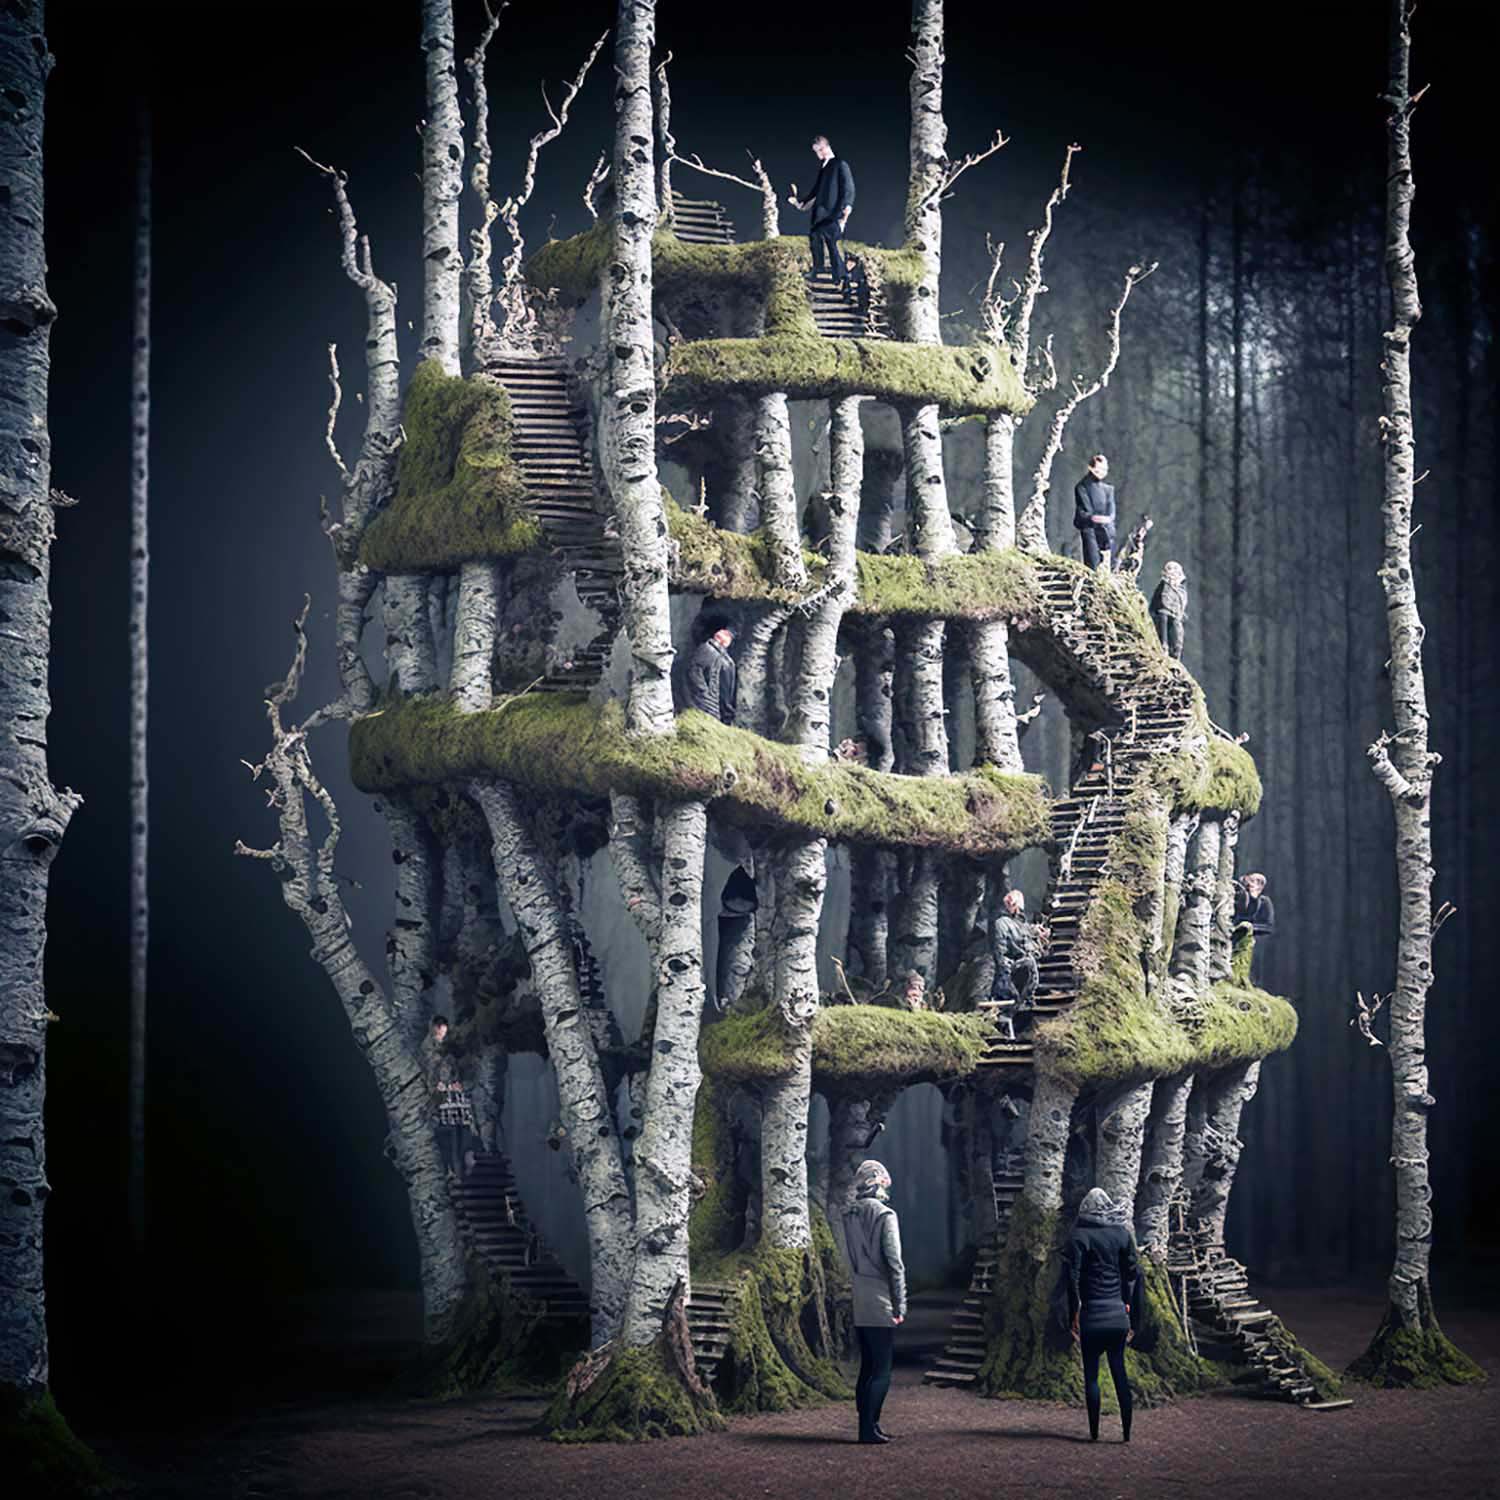 Tree Manipulation Series by Ulf Mejergren Architects (UMA)